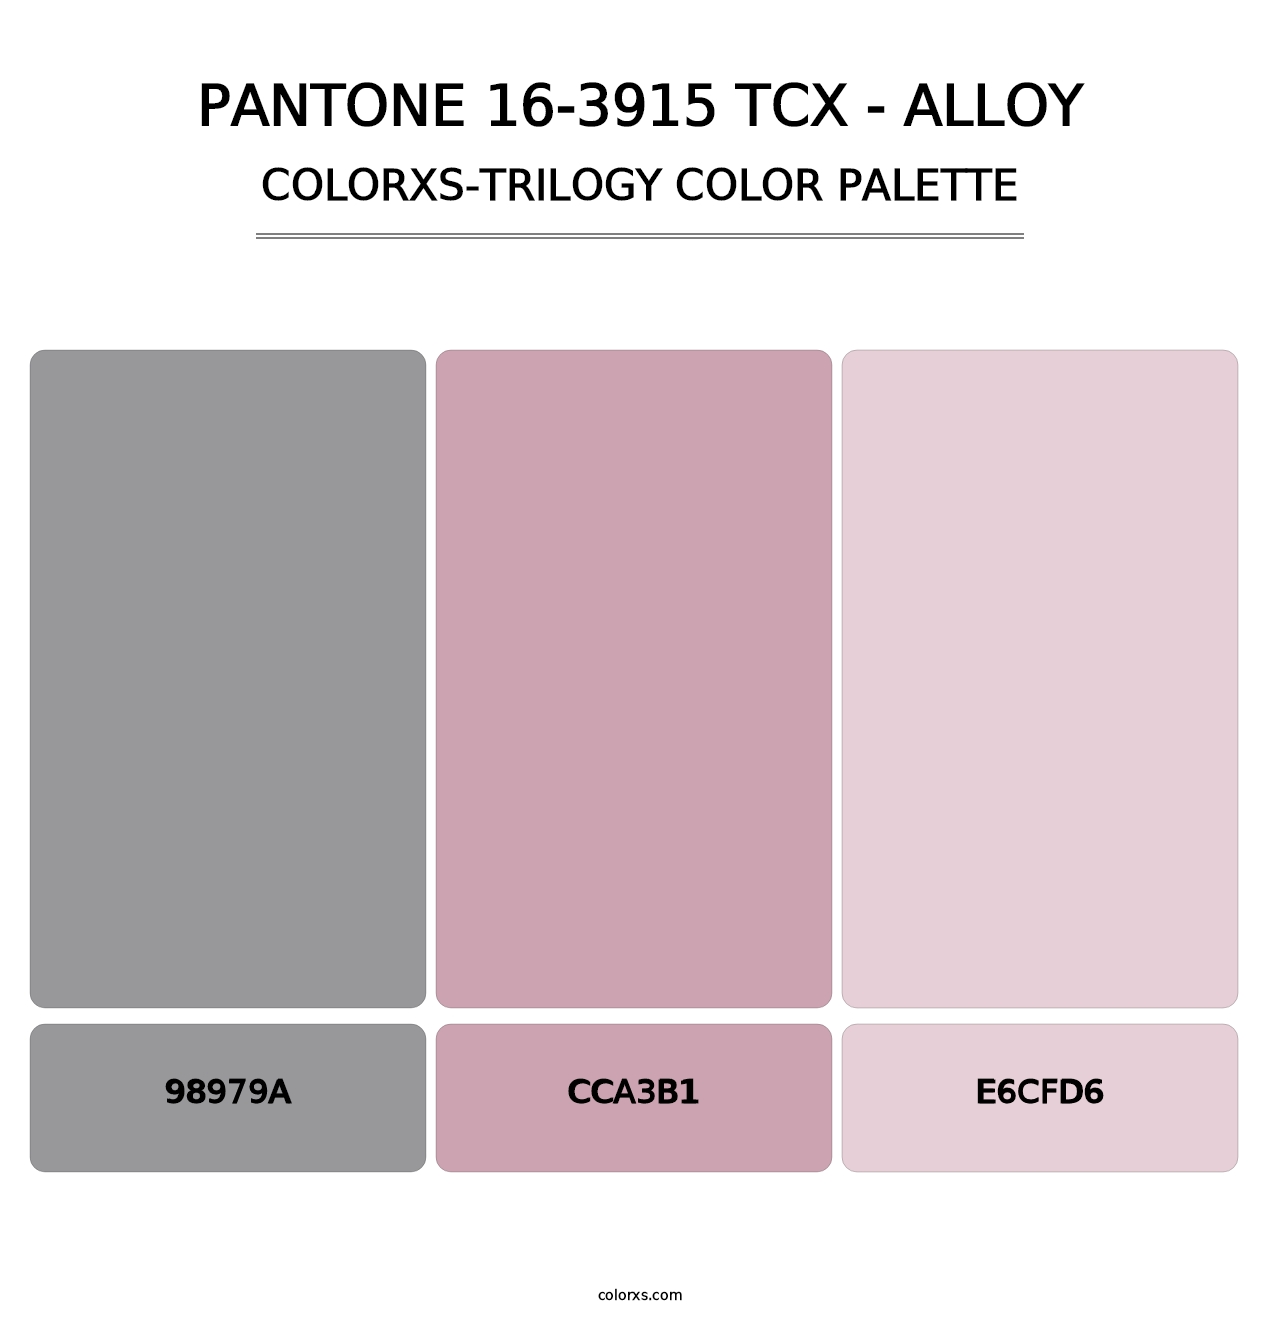 PANTONE 16-3915 TCX - Alloy - Colorxs Trilogy Palette